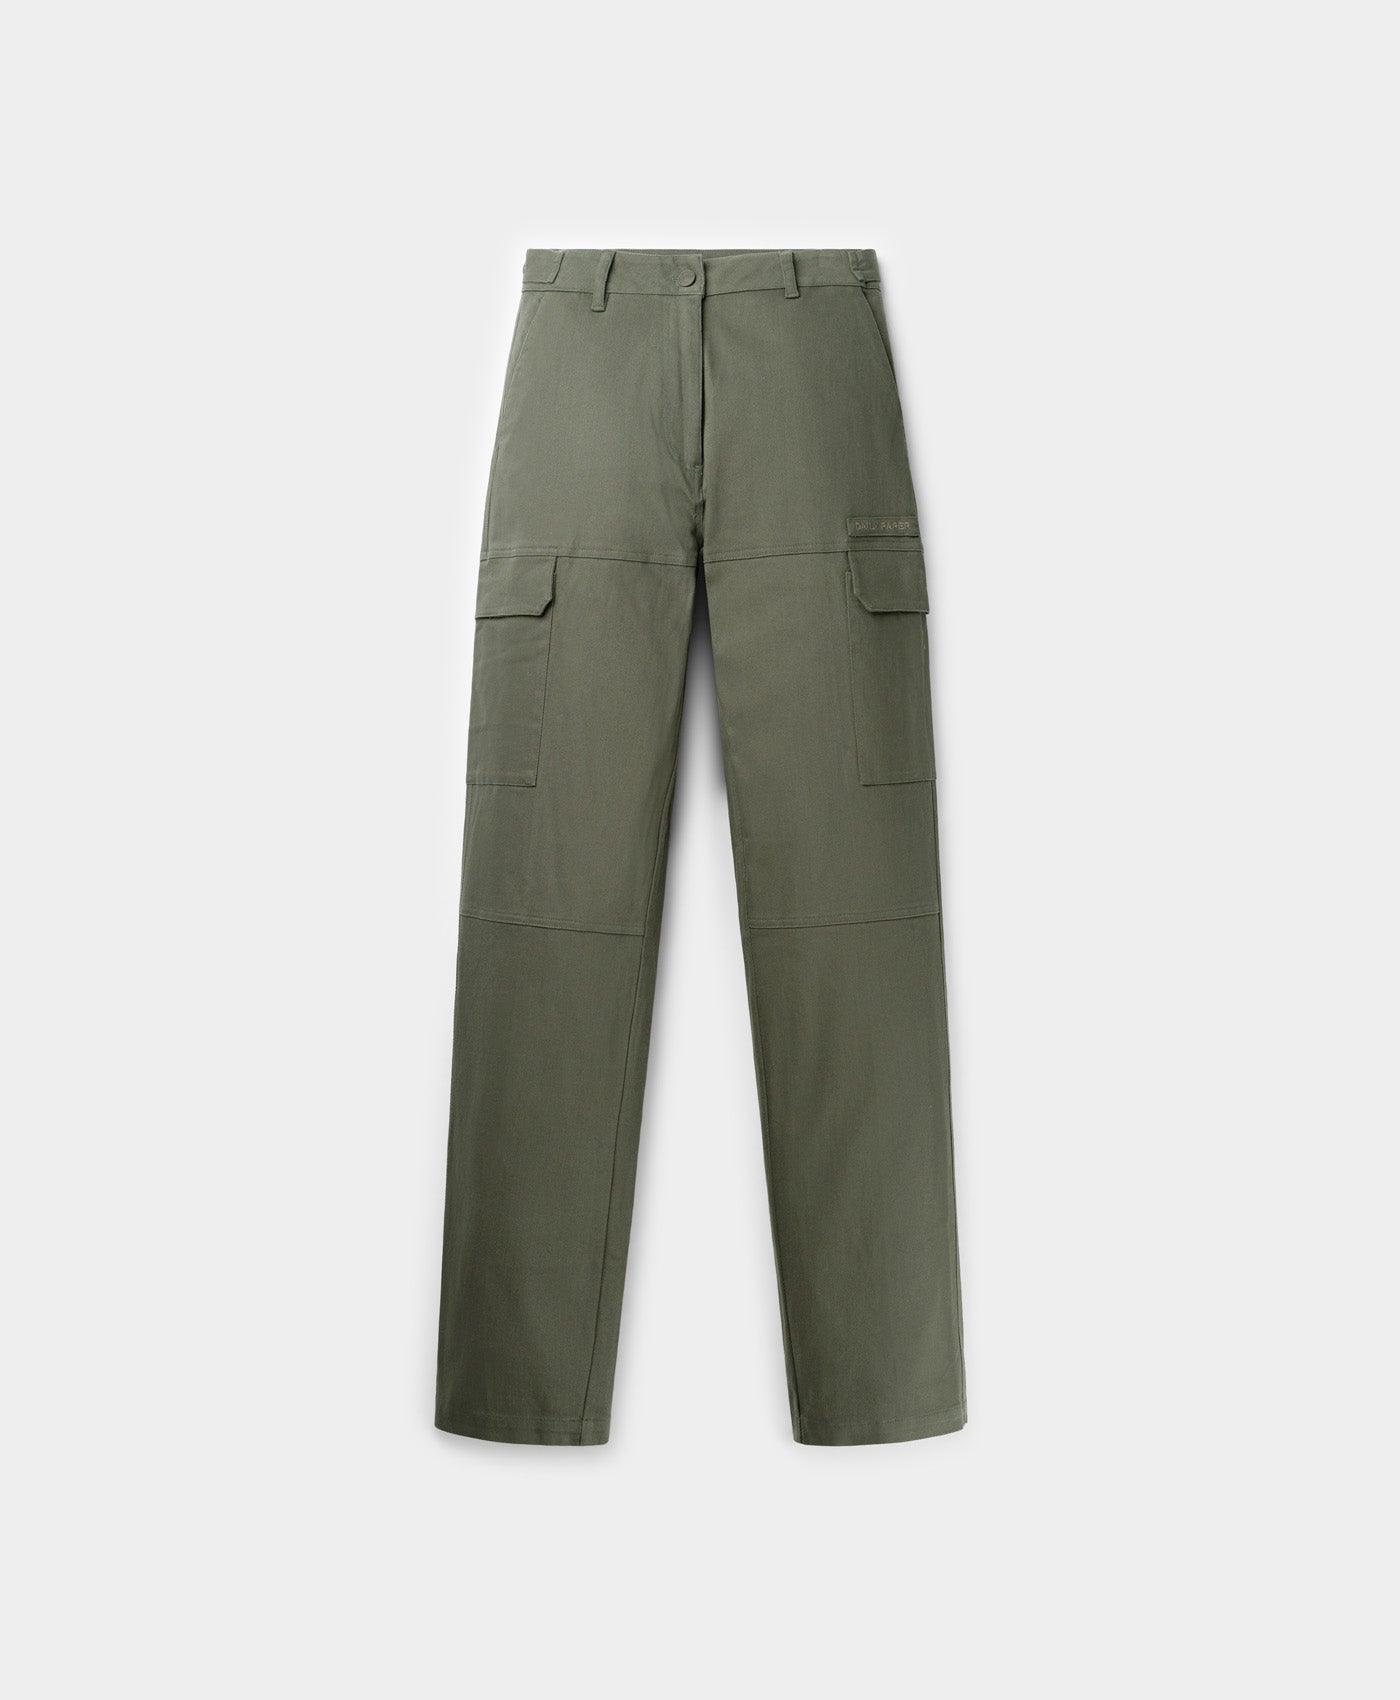 DP - Chimera Green Ezea  Cargo Pants - Packshot - Front